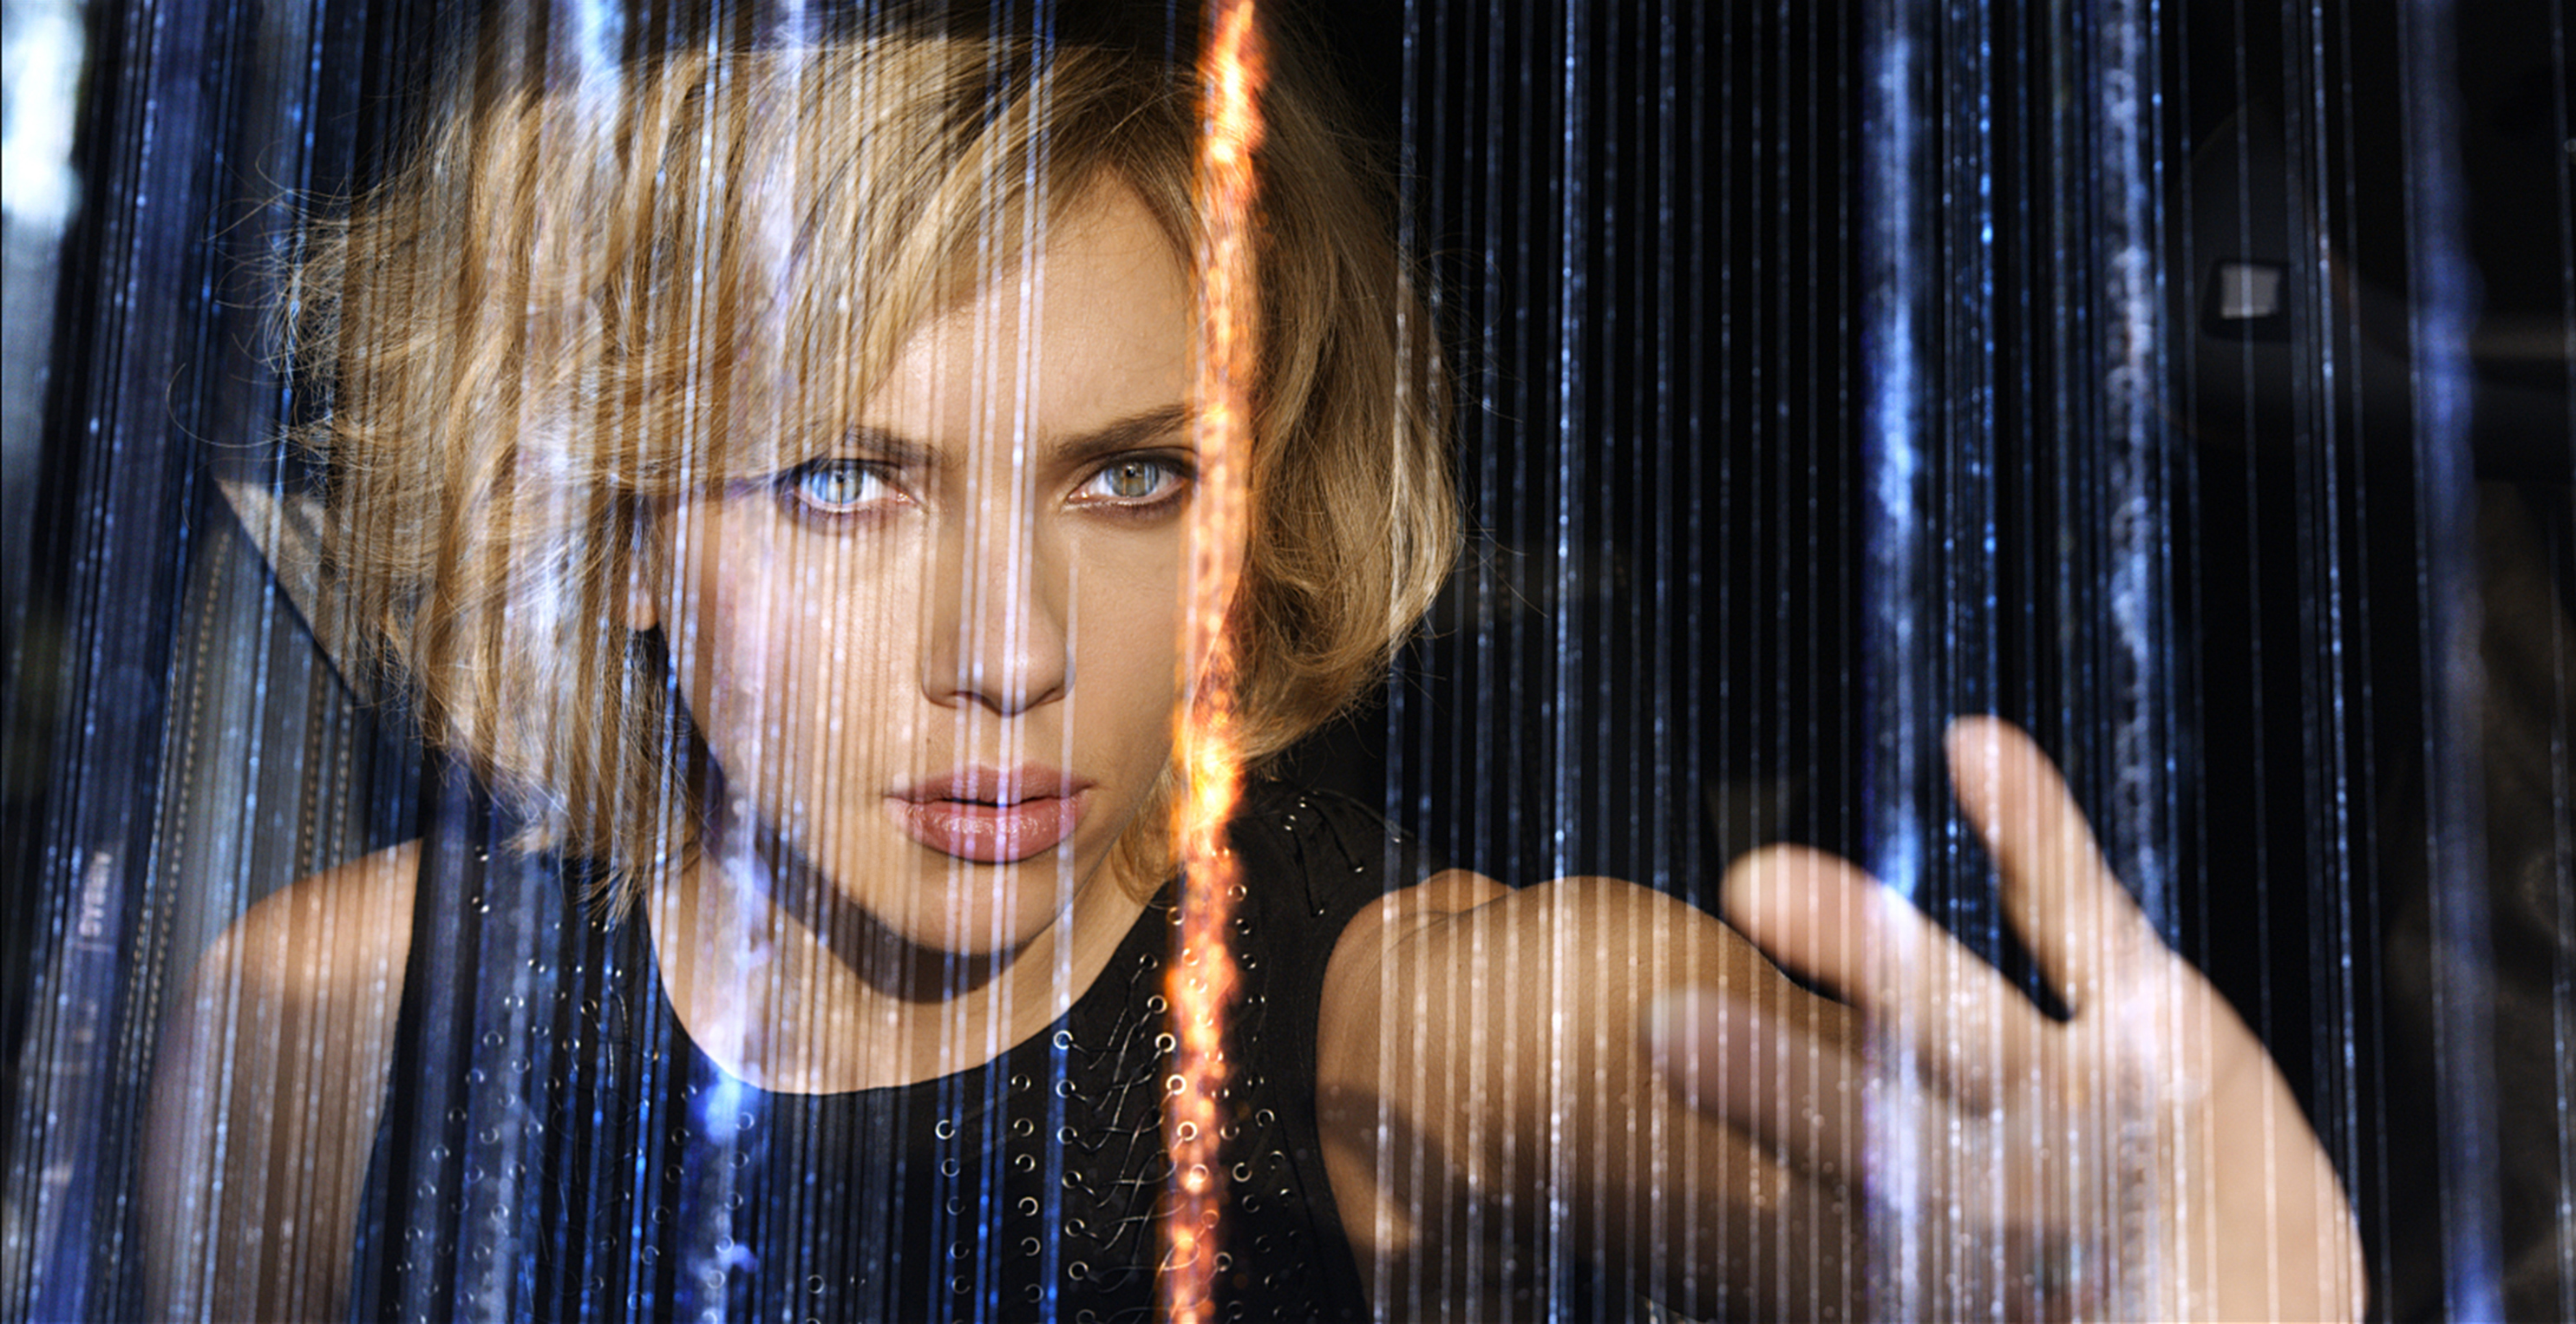 Report: Scarlett Johansson will star in Ghost in the Shell film